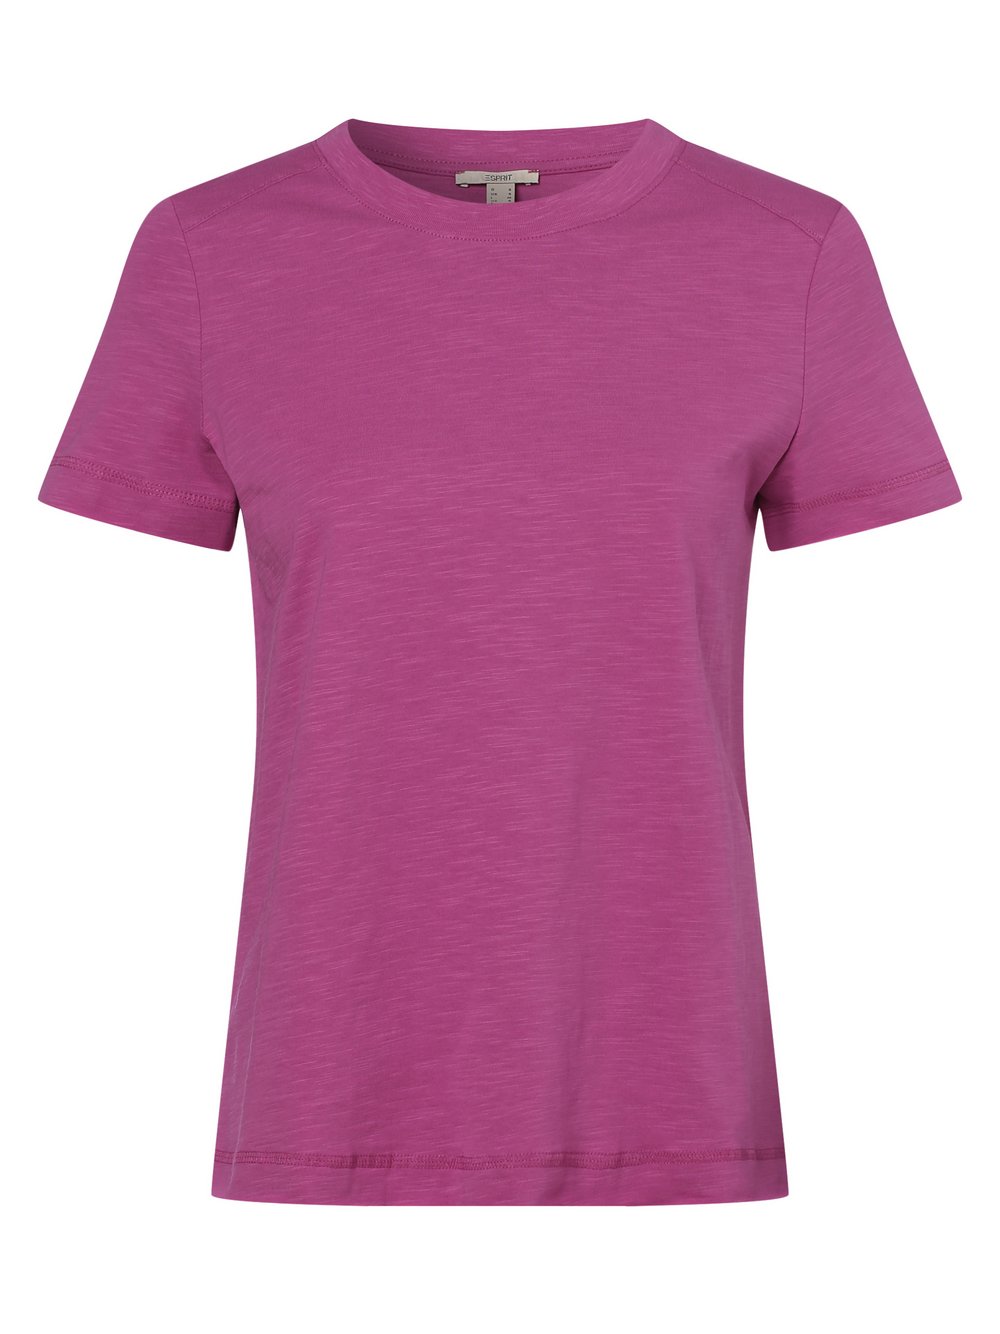 Esprit Casual - T-shirt damski, wyrazisty róż